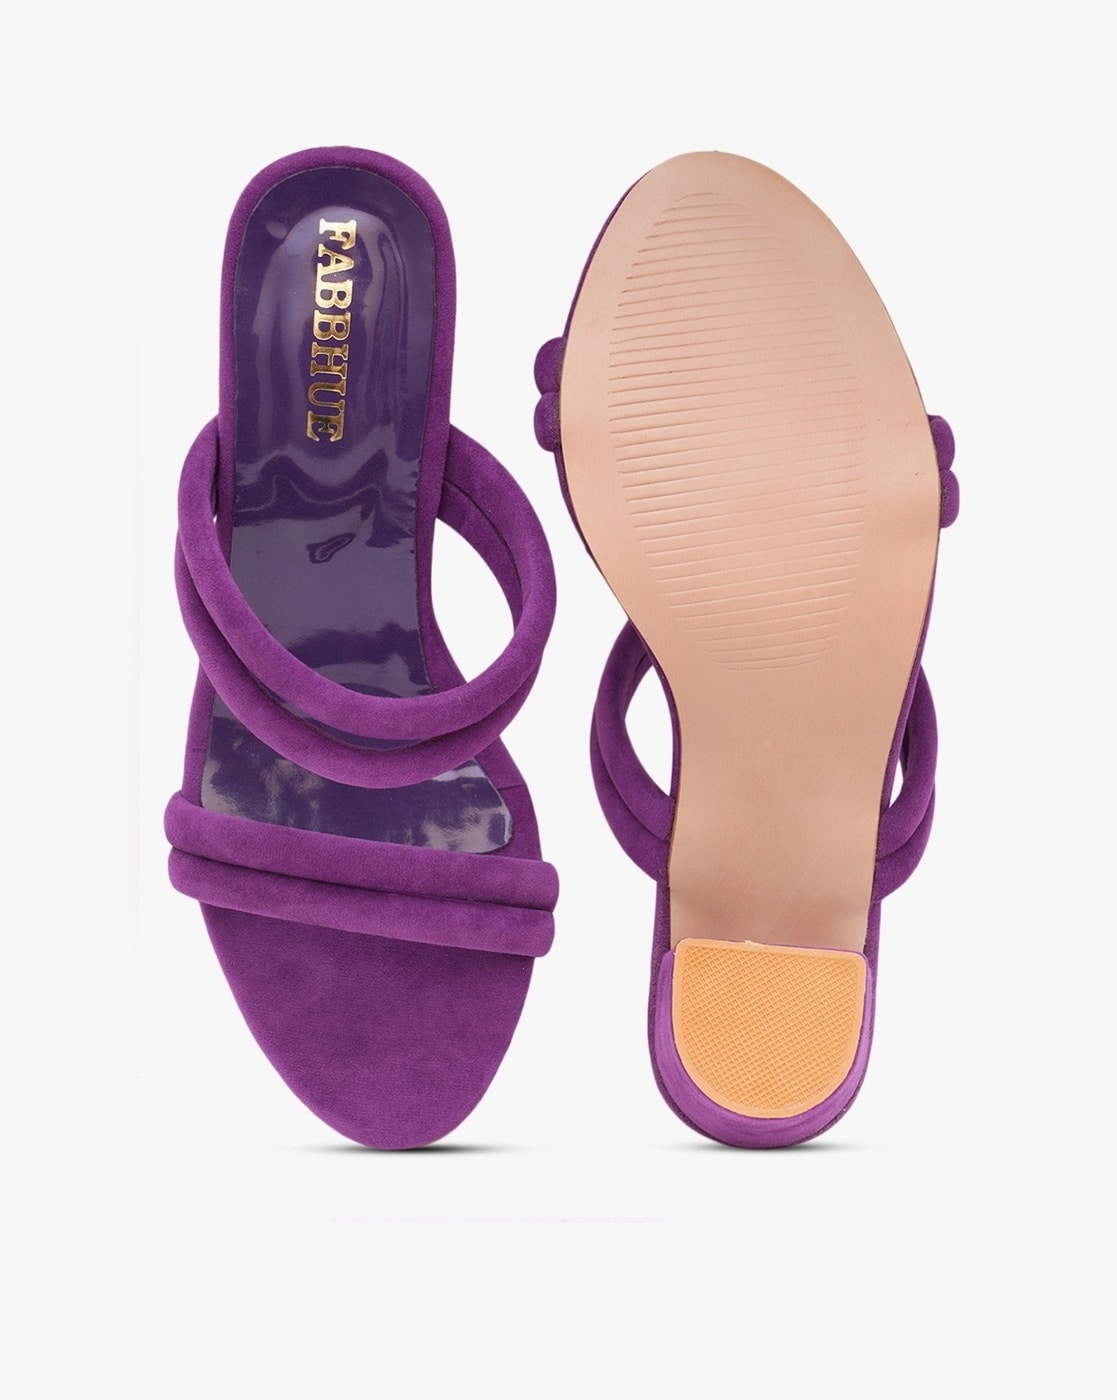 Macaron : Lavender - Lilac Block heels – Papa Don't Preach